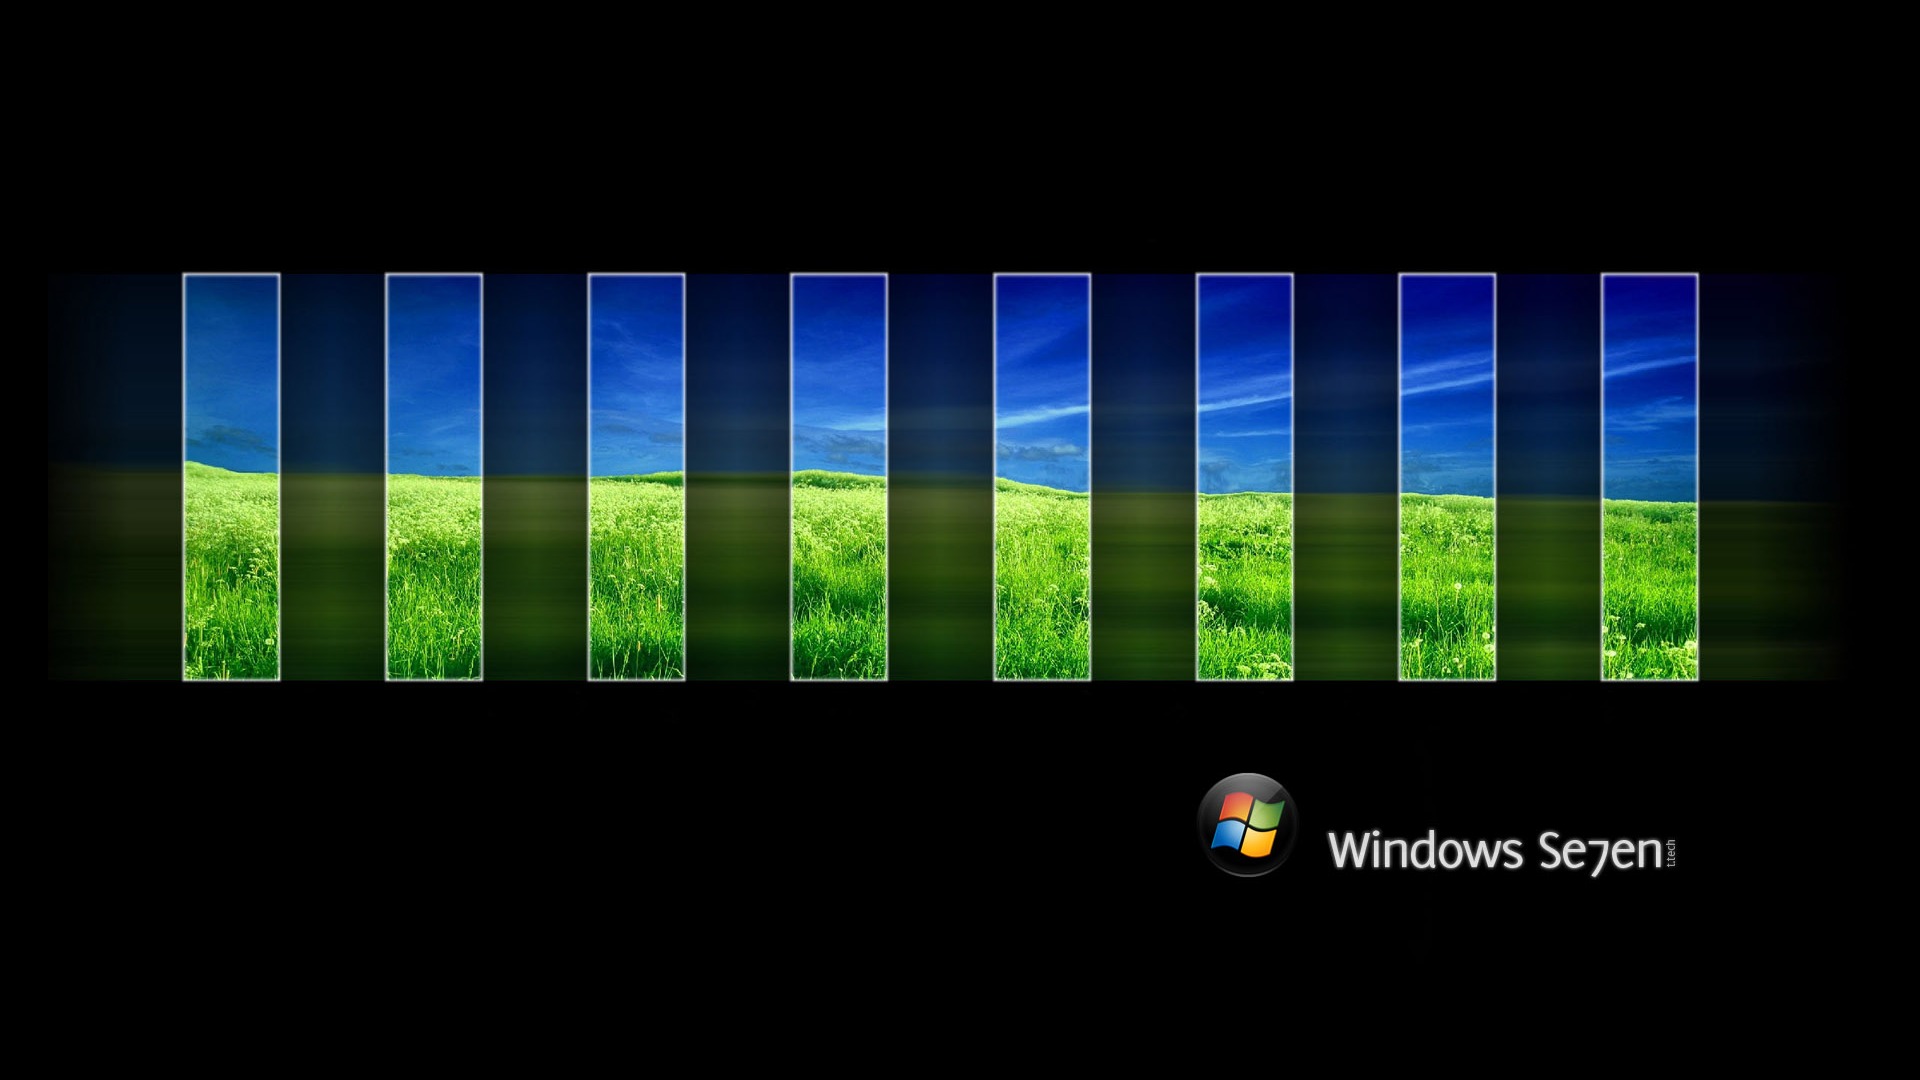 Fondos de escritorio de Windows7 #15 - 1920x1080